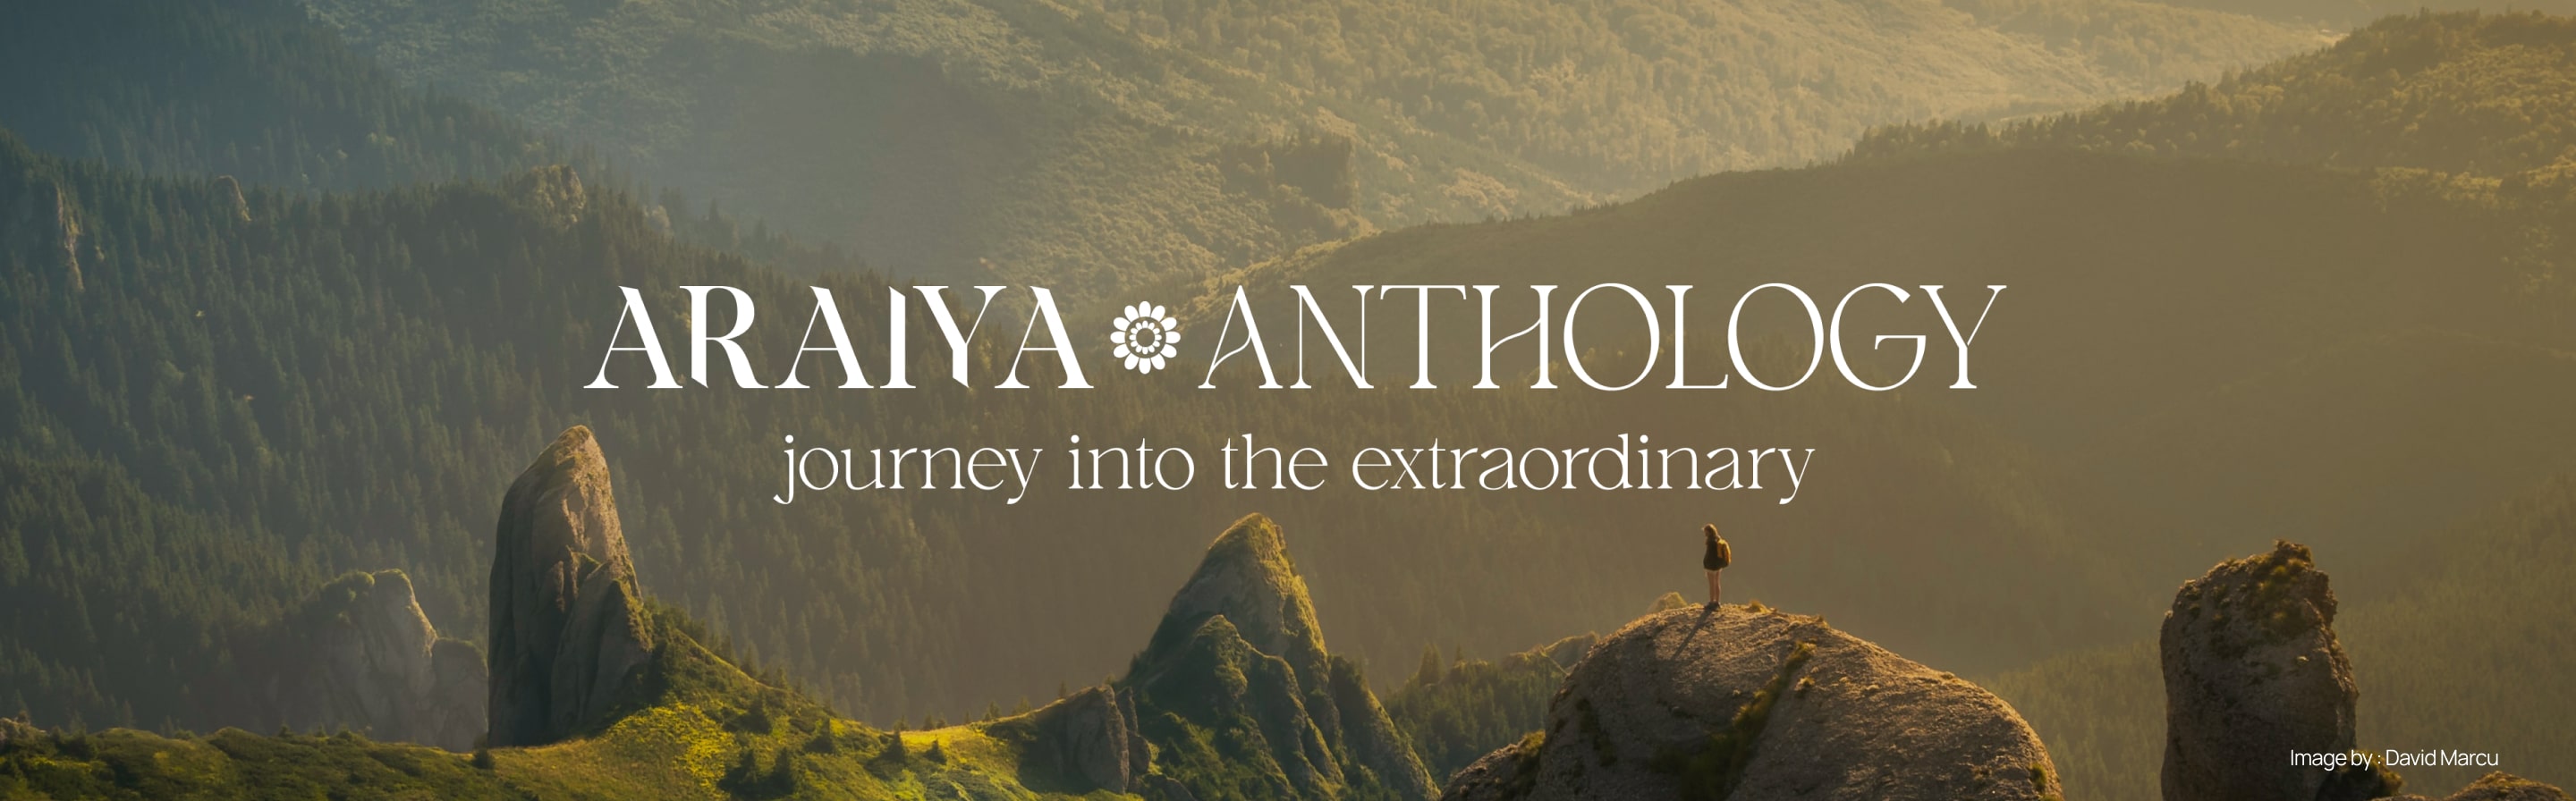 Araiya Anthology